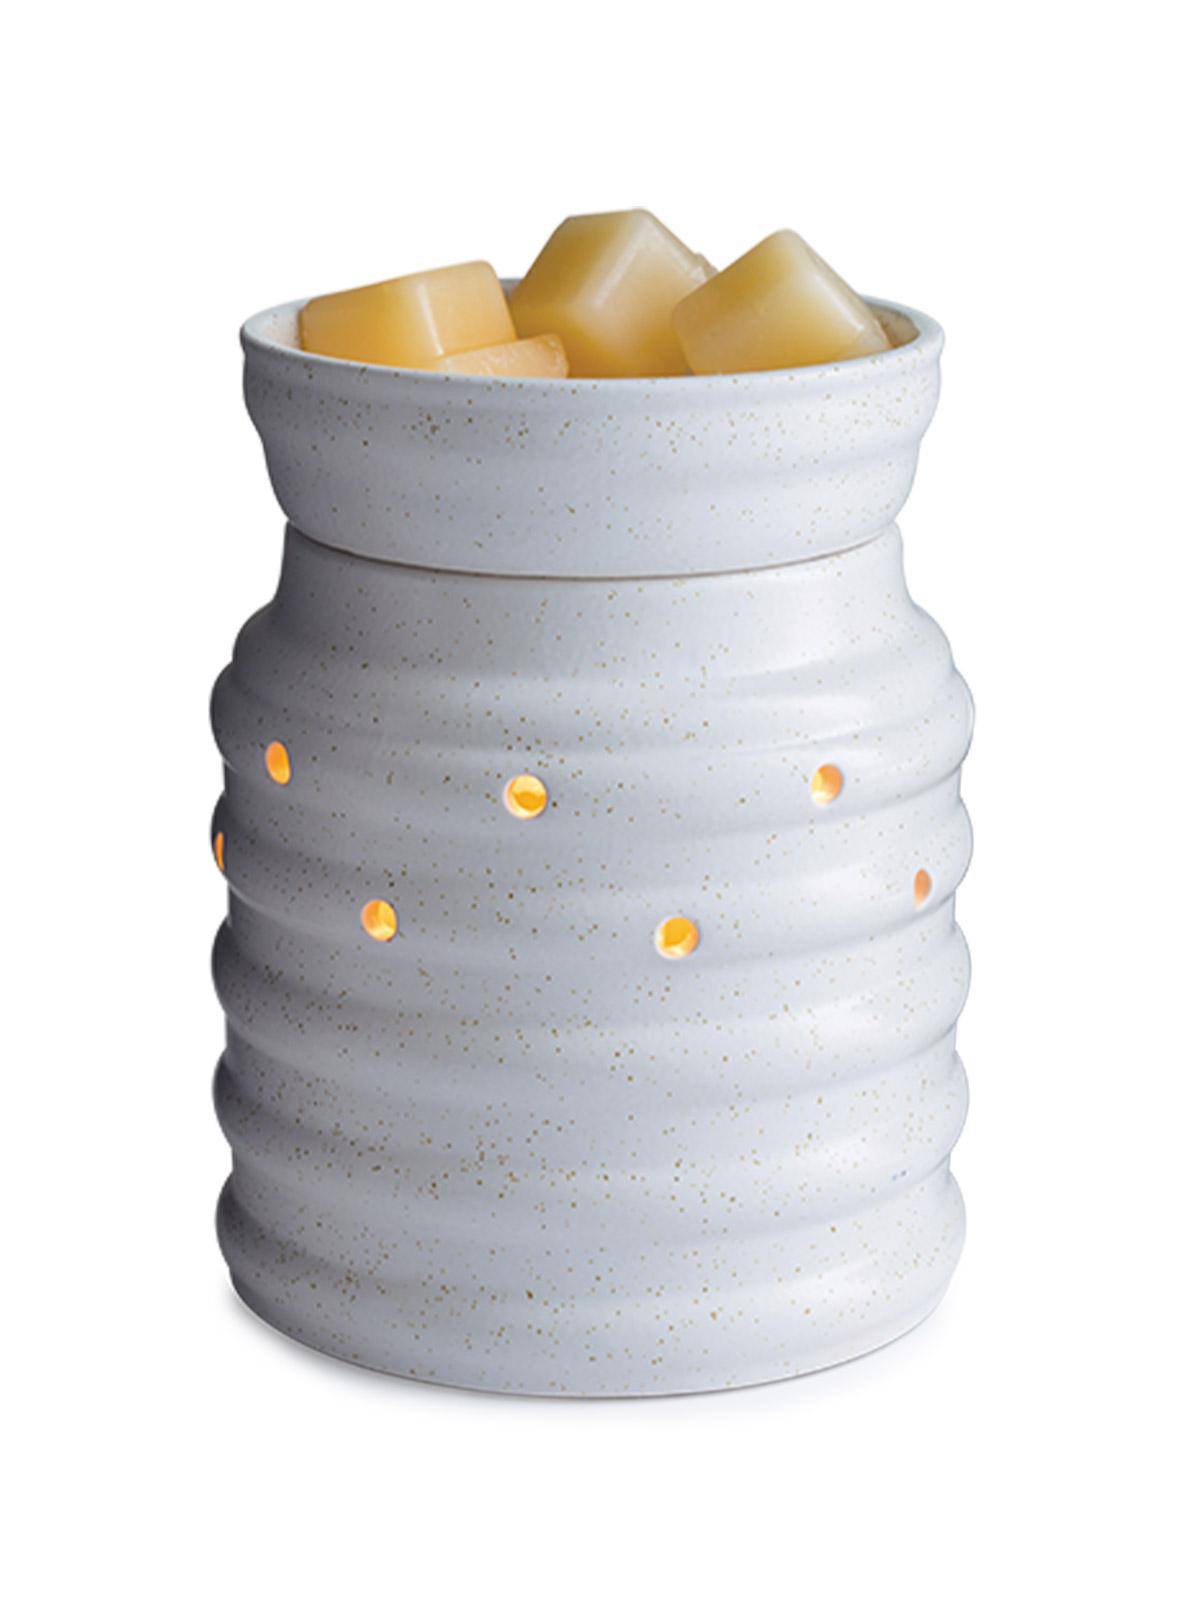 FARMHOUSE Duftlampe elektrisch weiß Keramik--HYGGEBI-€29,90